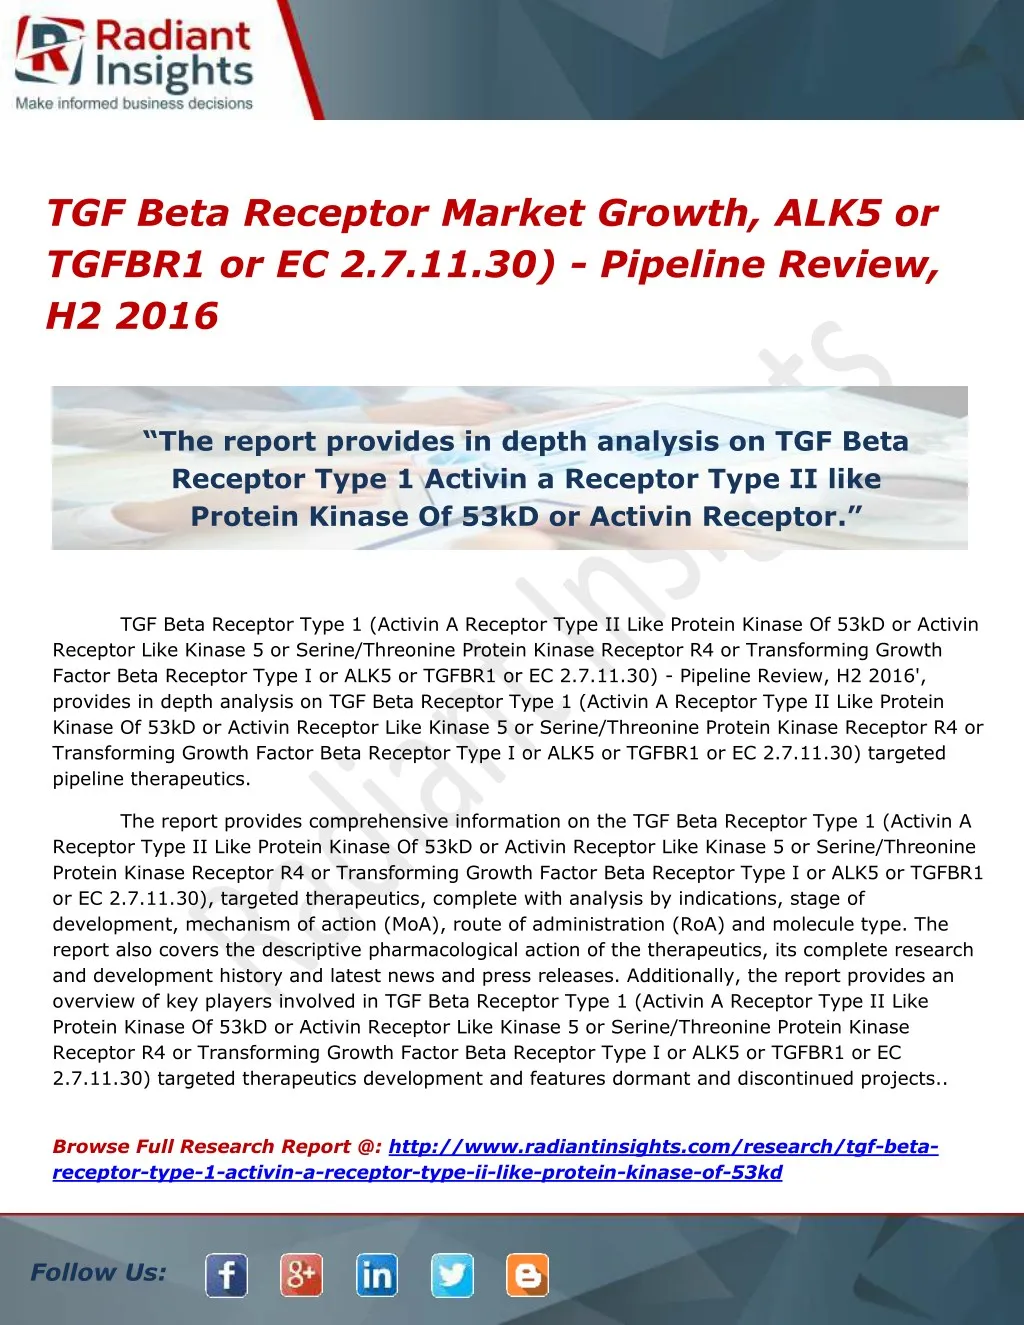 tgf beta receptor market growth alk5 or tgfbr1